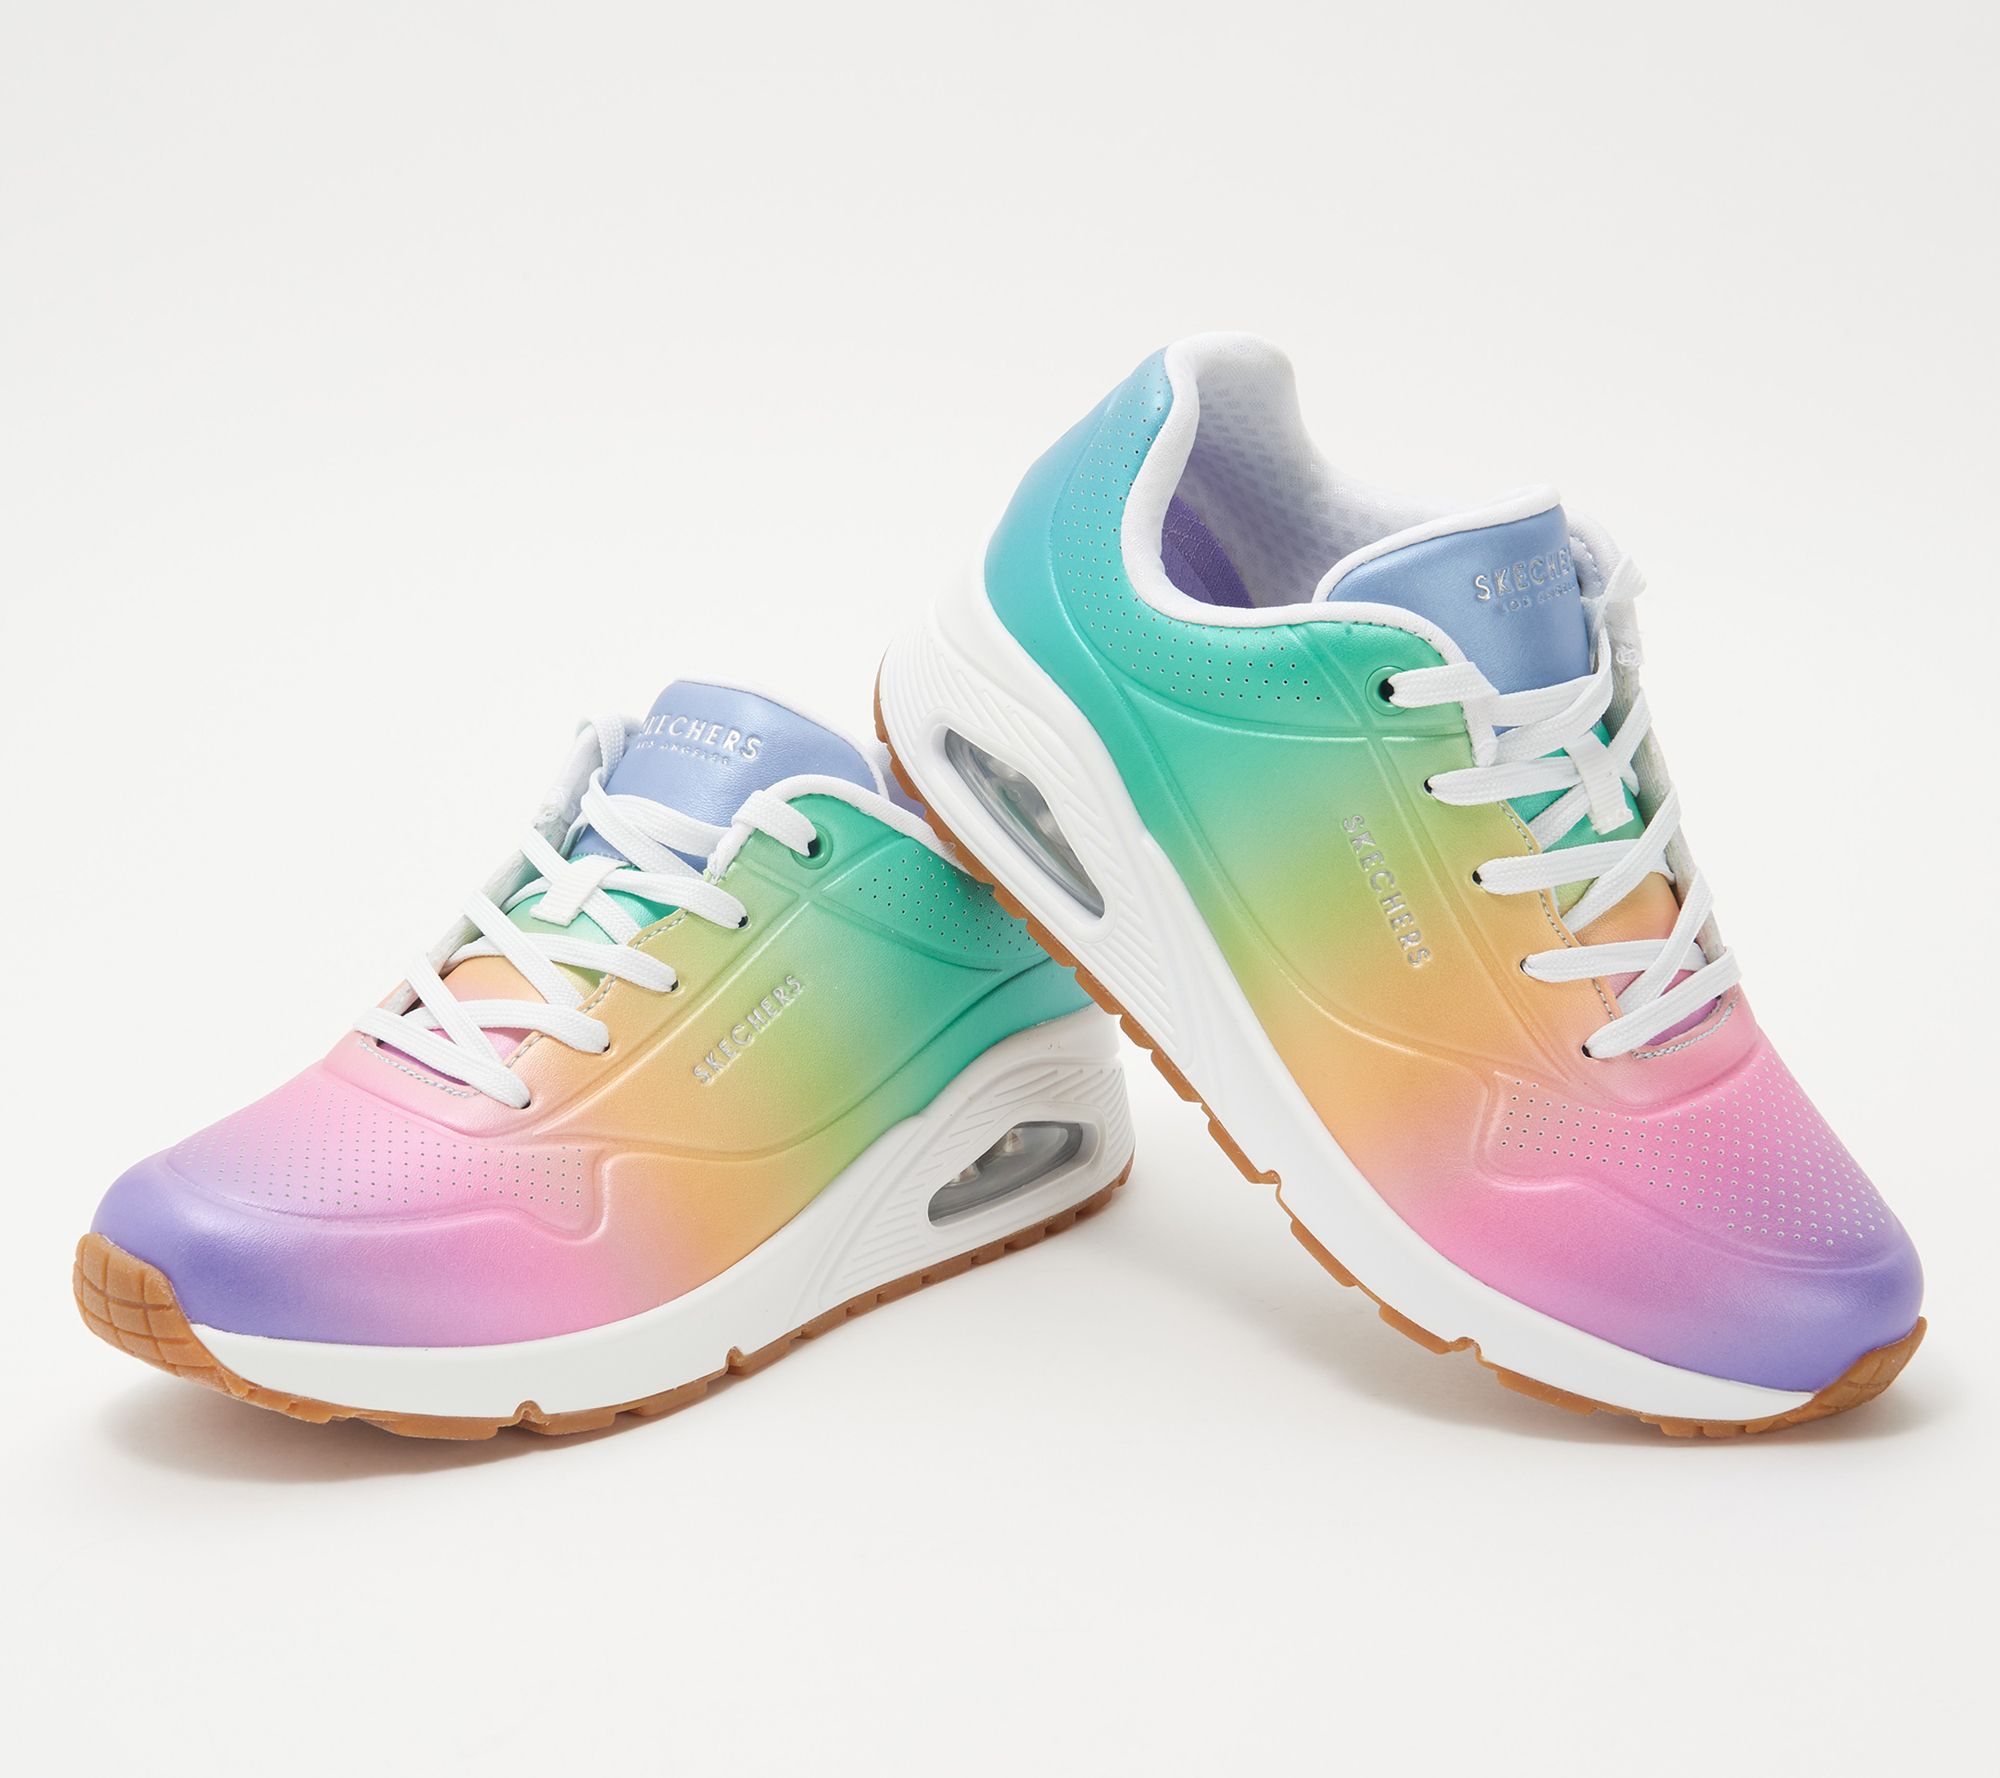 skechers colorful sneakers